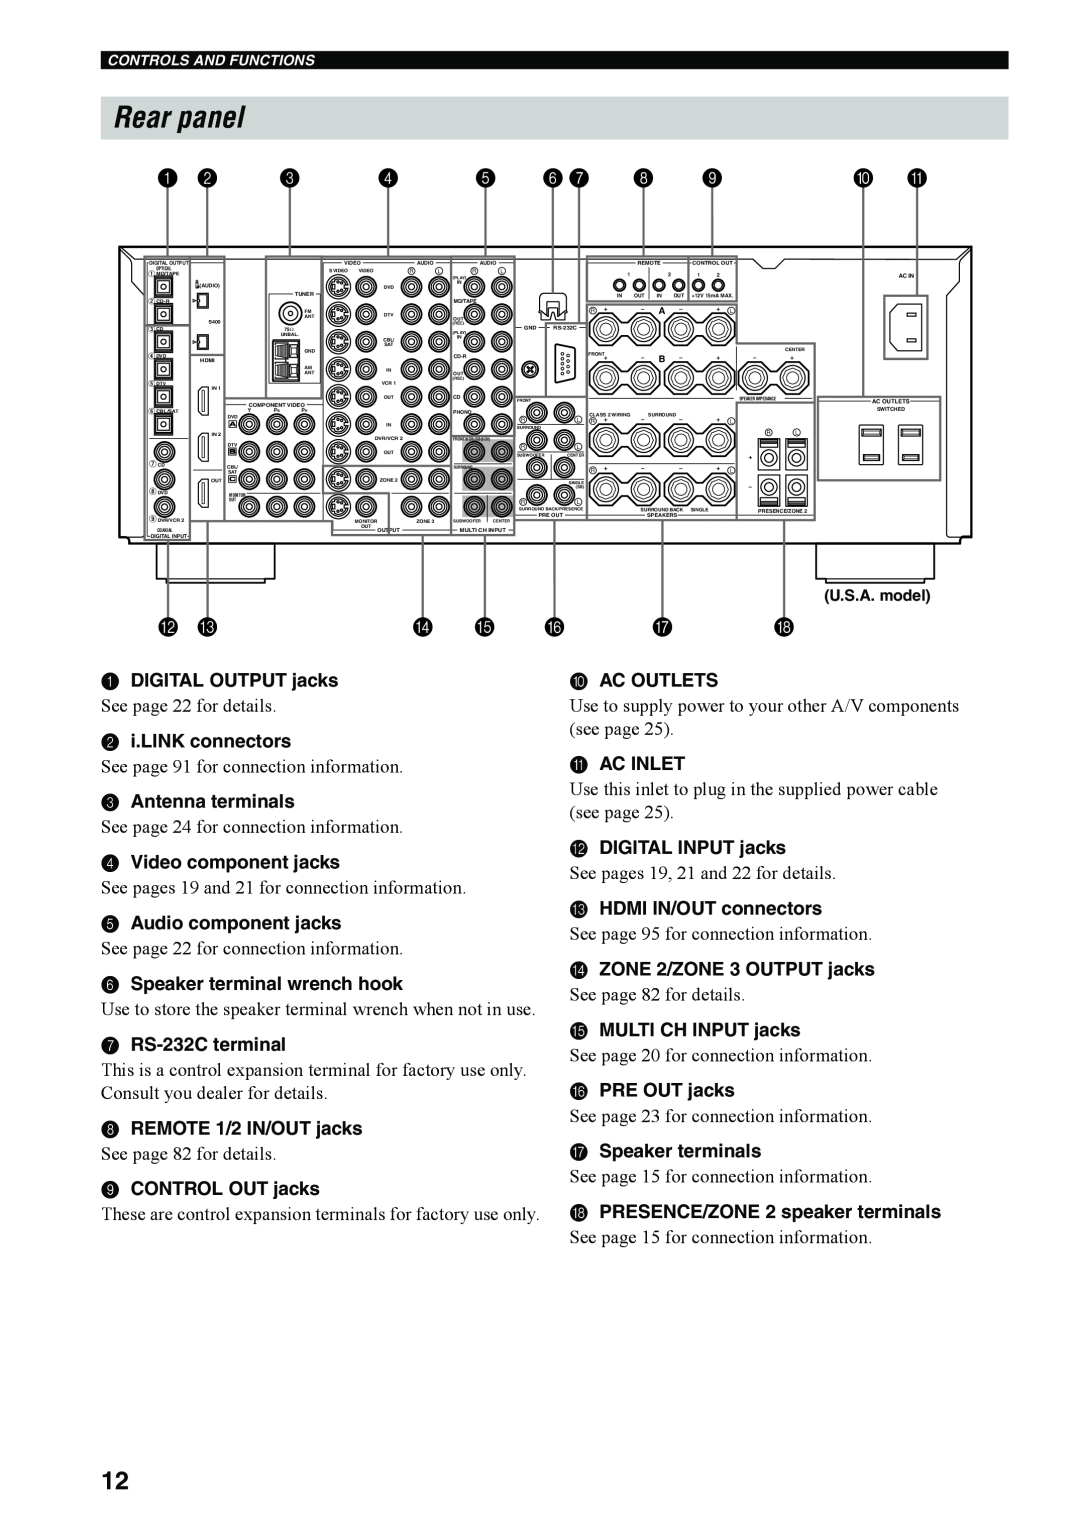 Yamaha RX-V4600 Rear panel, B C D E F G H, DIGITAL OUTPUT jacks, 2 i.LINK connectors, Antenna terminals, CONTROL OUT jacks 